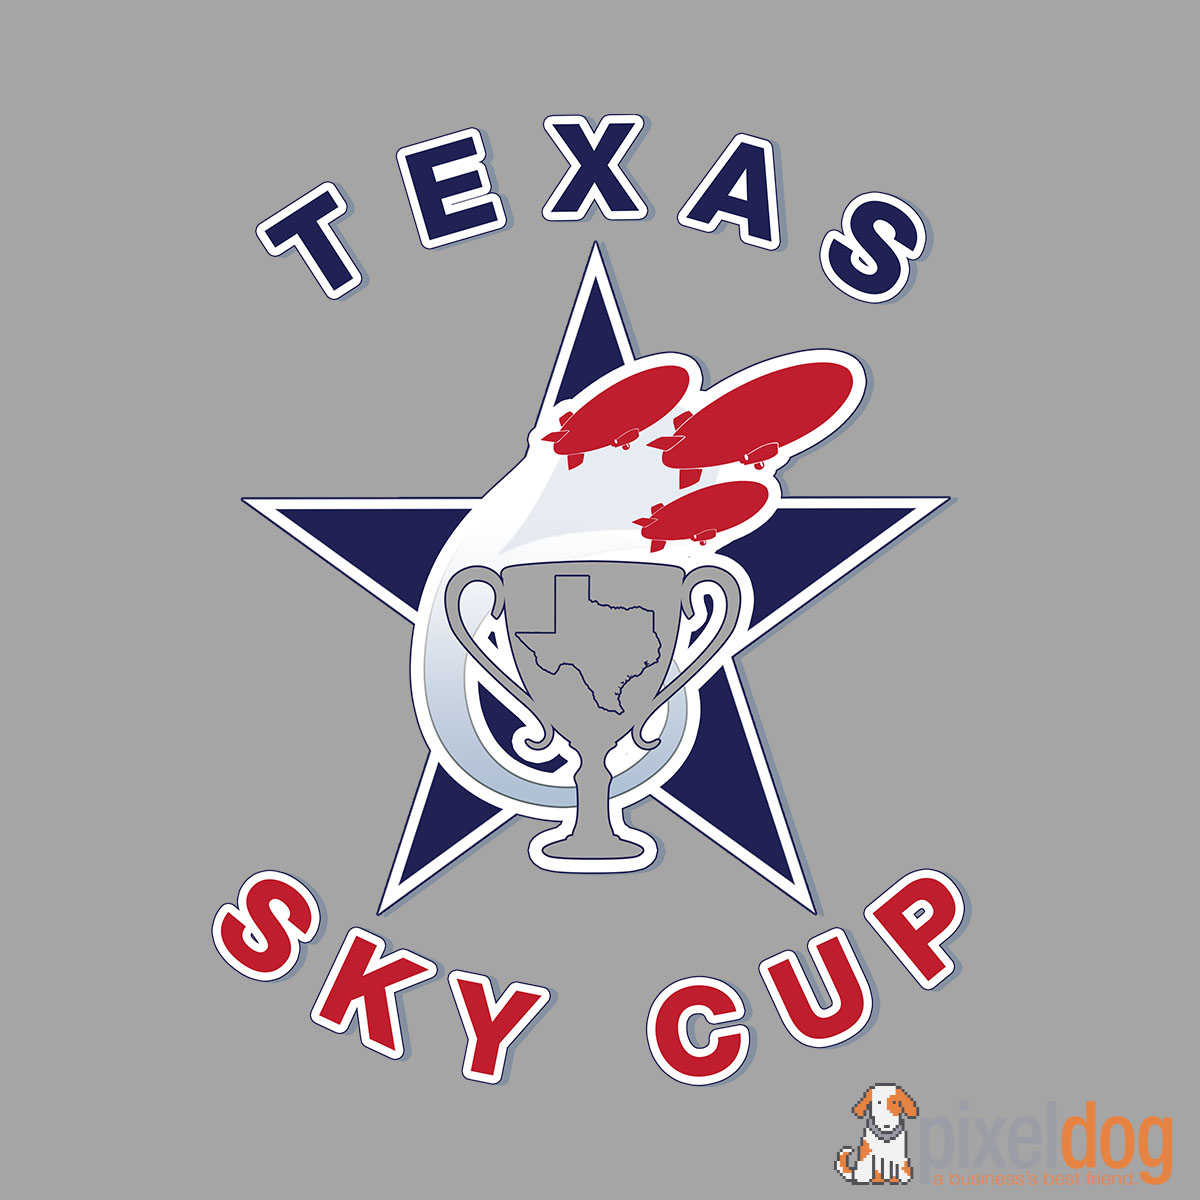 Texas Sky Cup (Event)